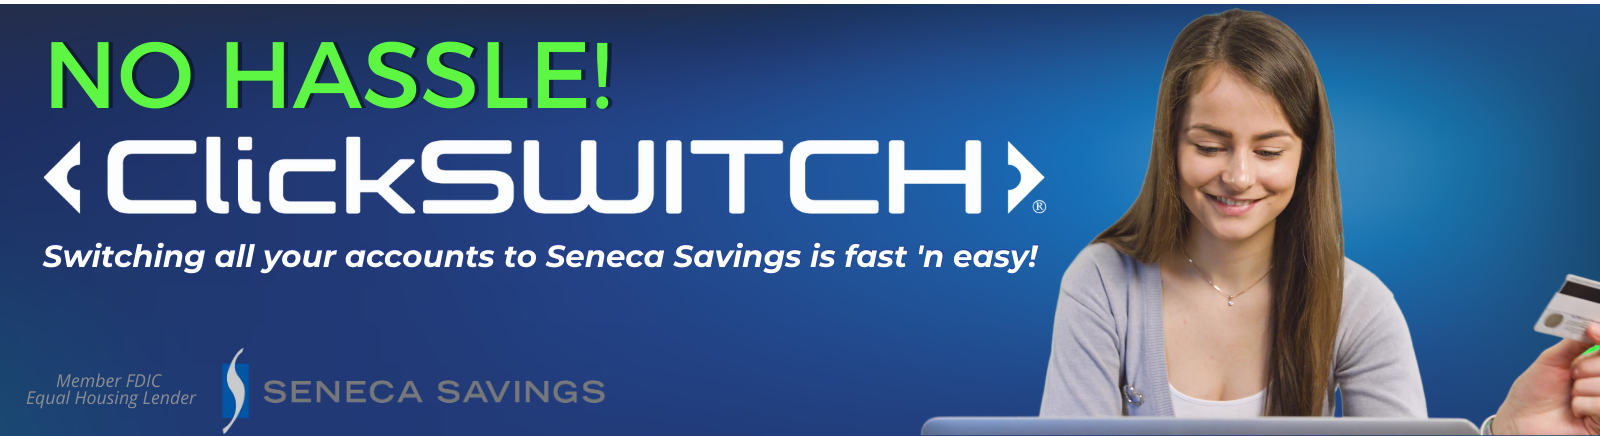 clickswitch to seneca savings